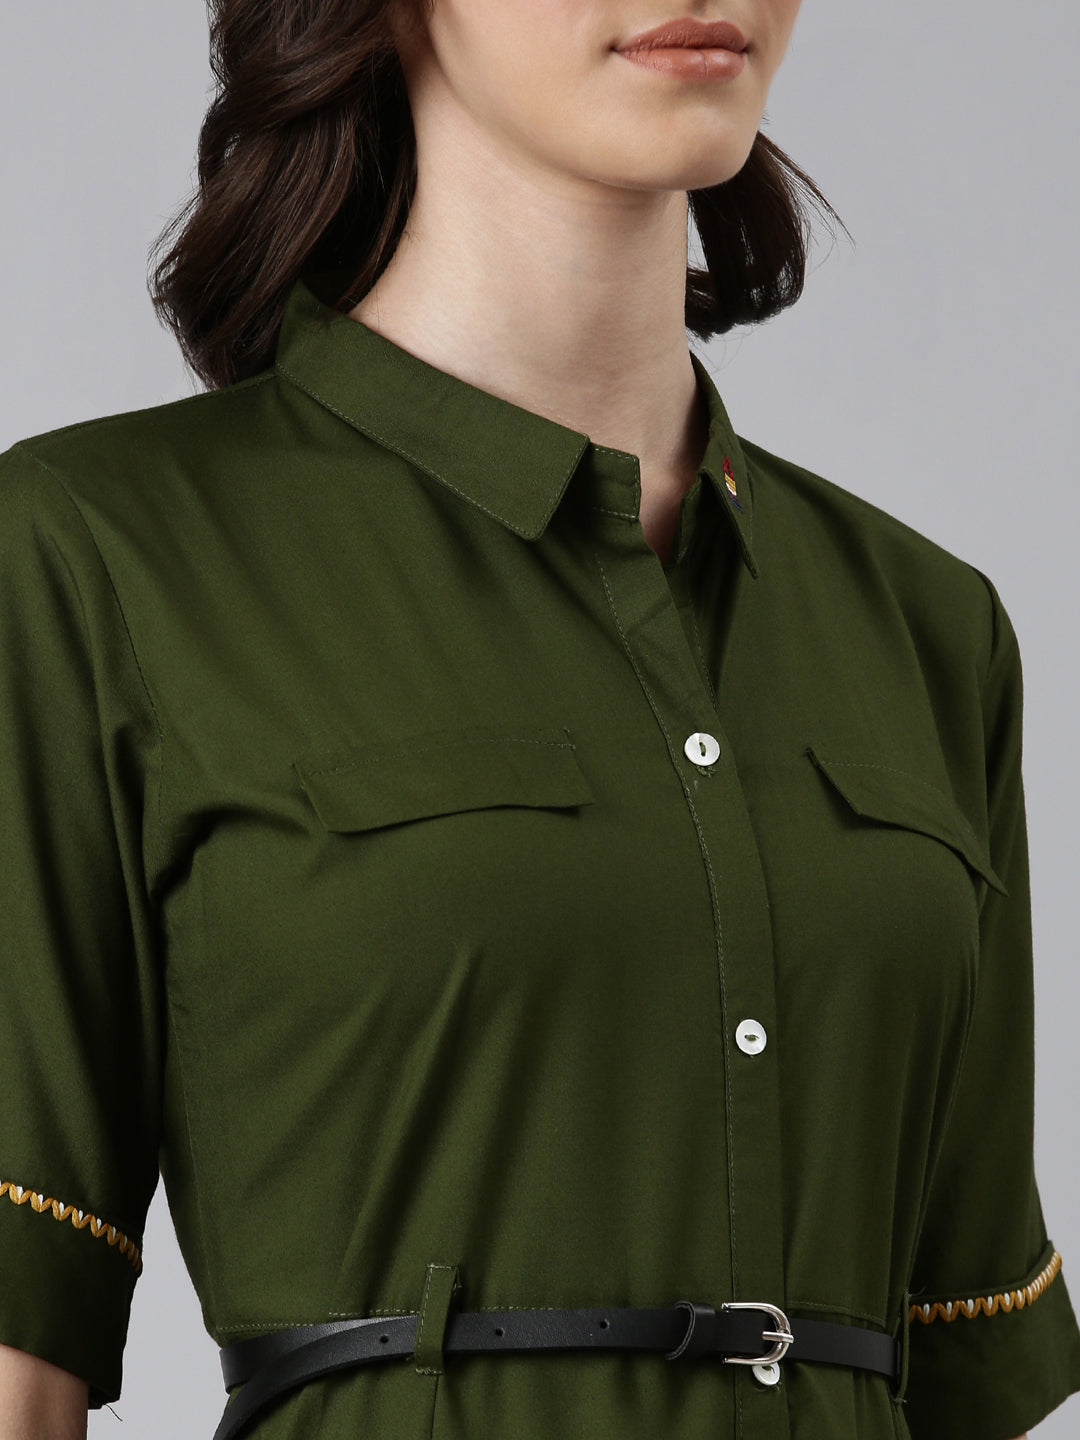 Women Olive Solid Shirt Dress